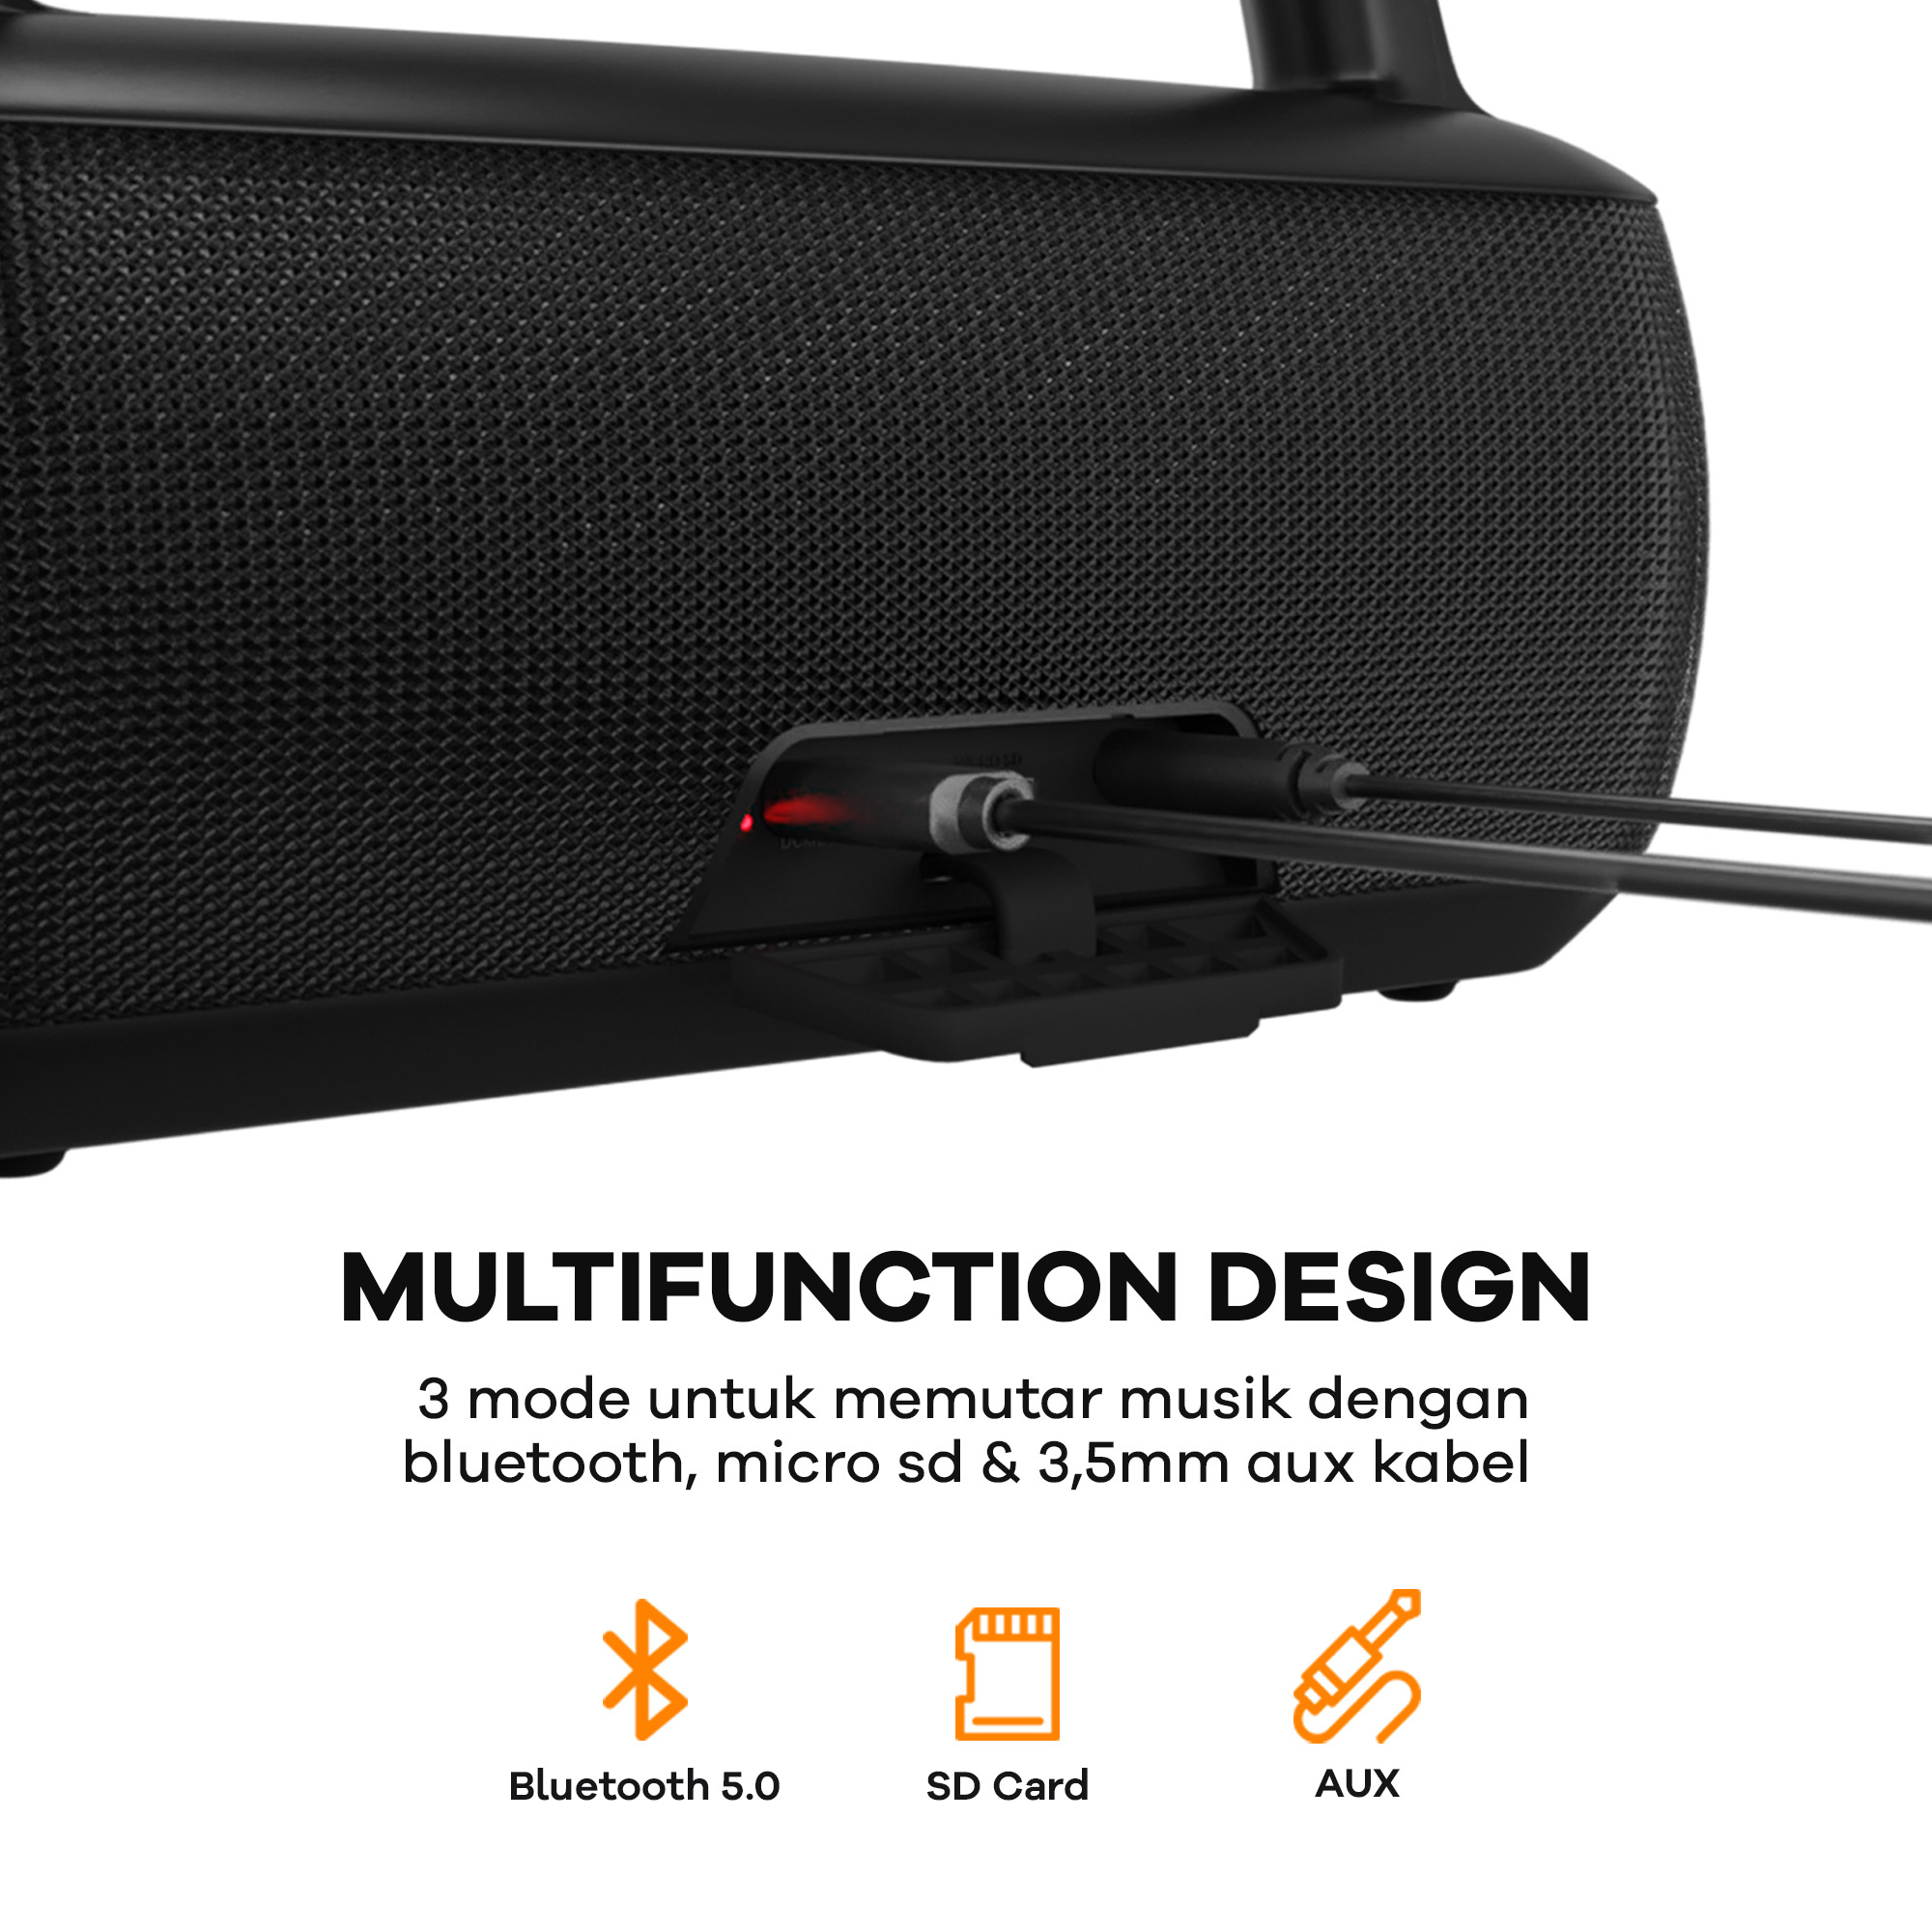 JETE S8 Series Speaker Portable Bluetooth Multifunction Design, SD card dan kabel AUX